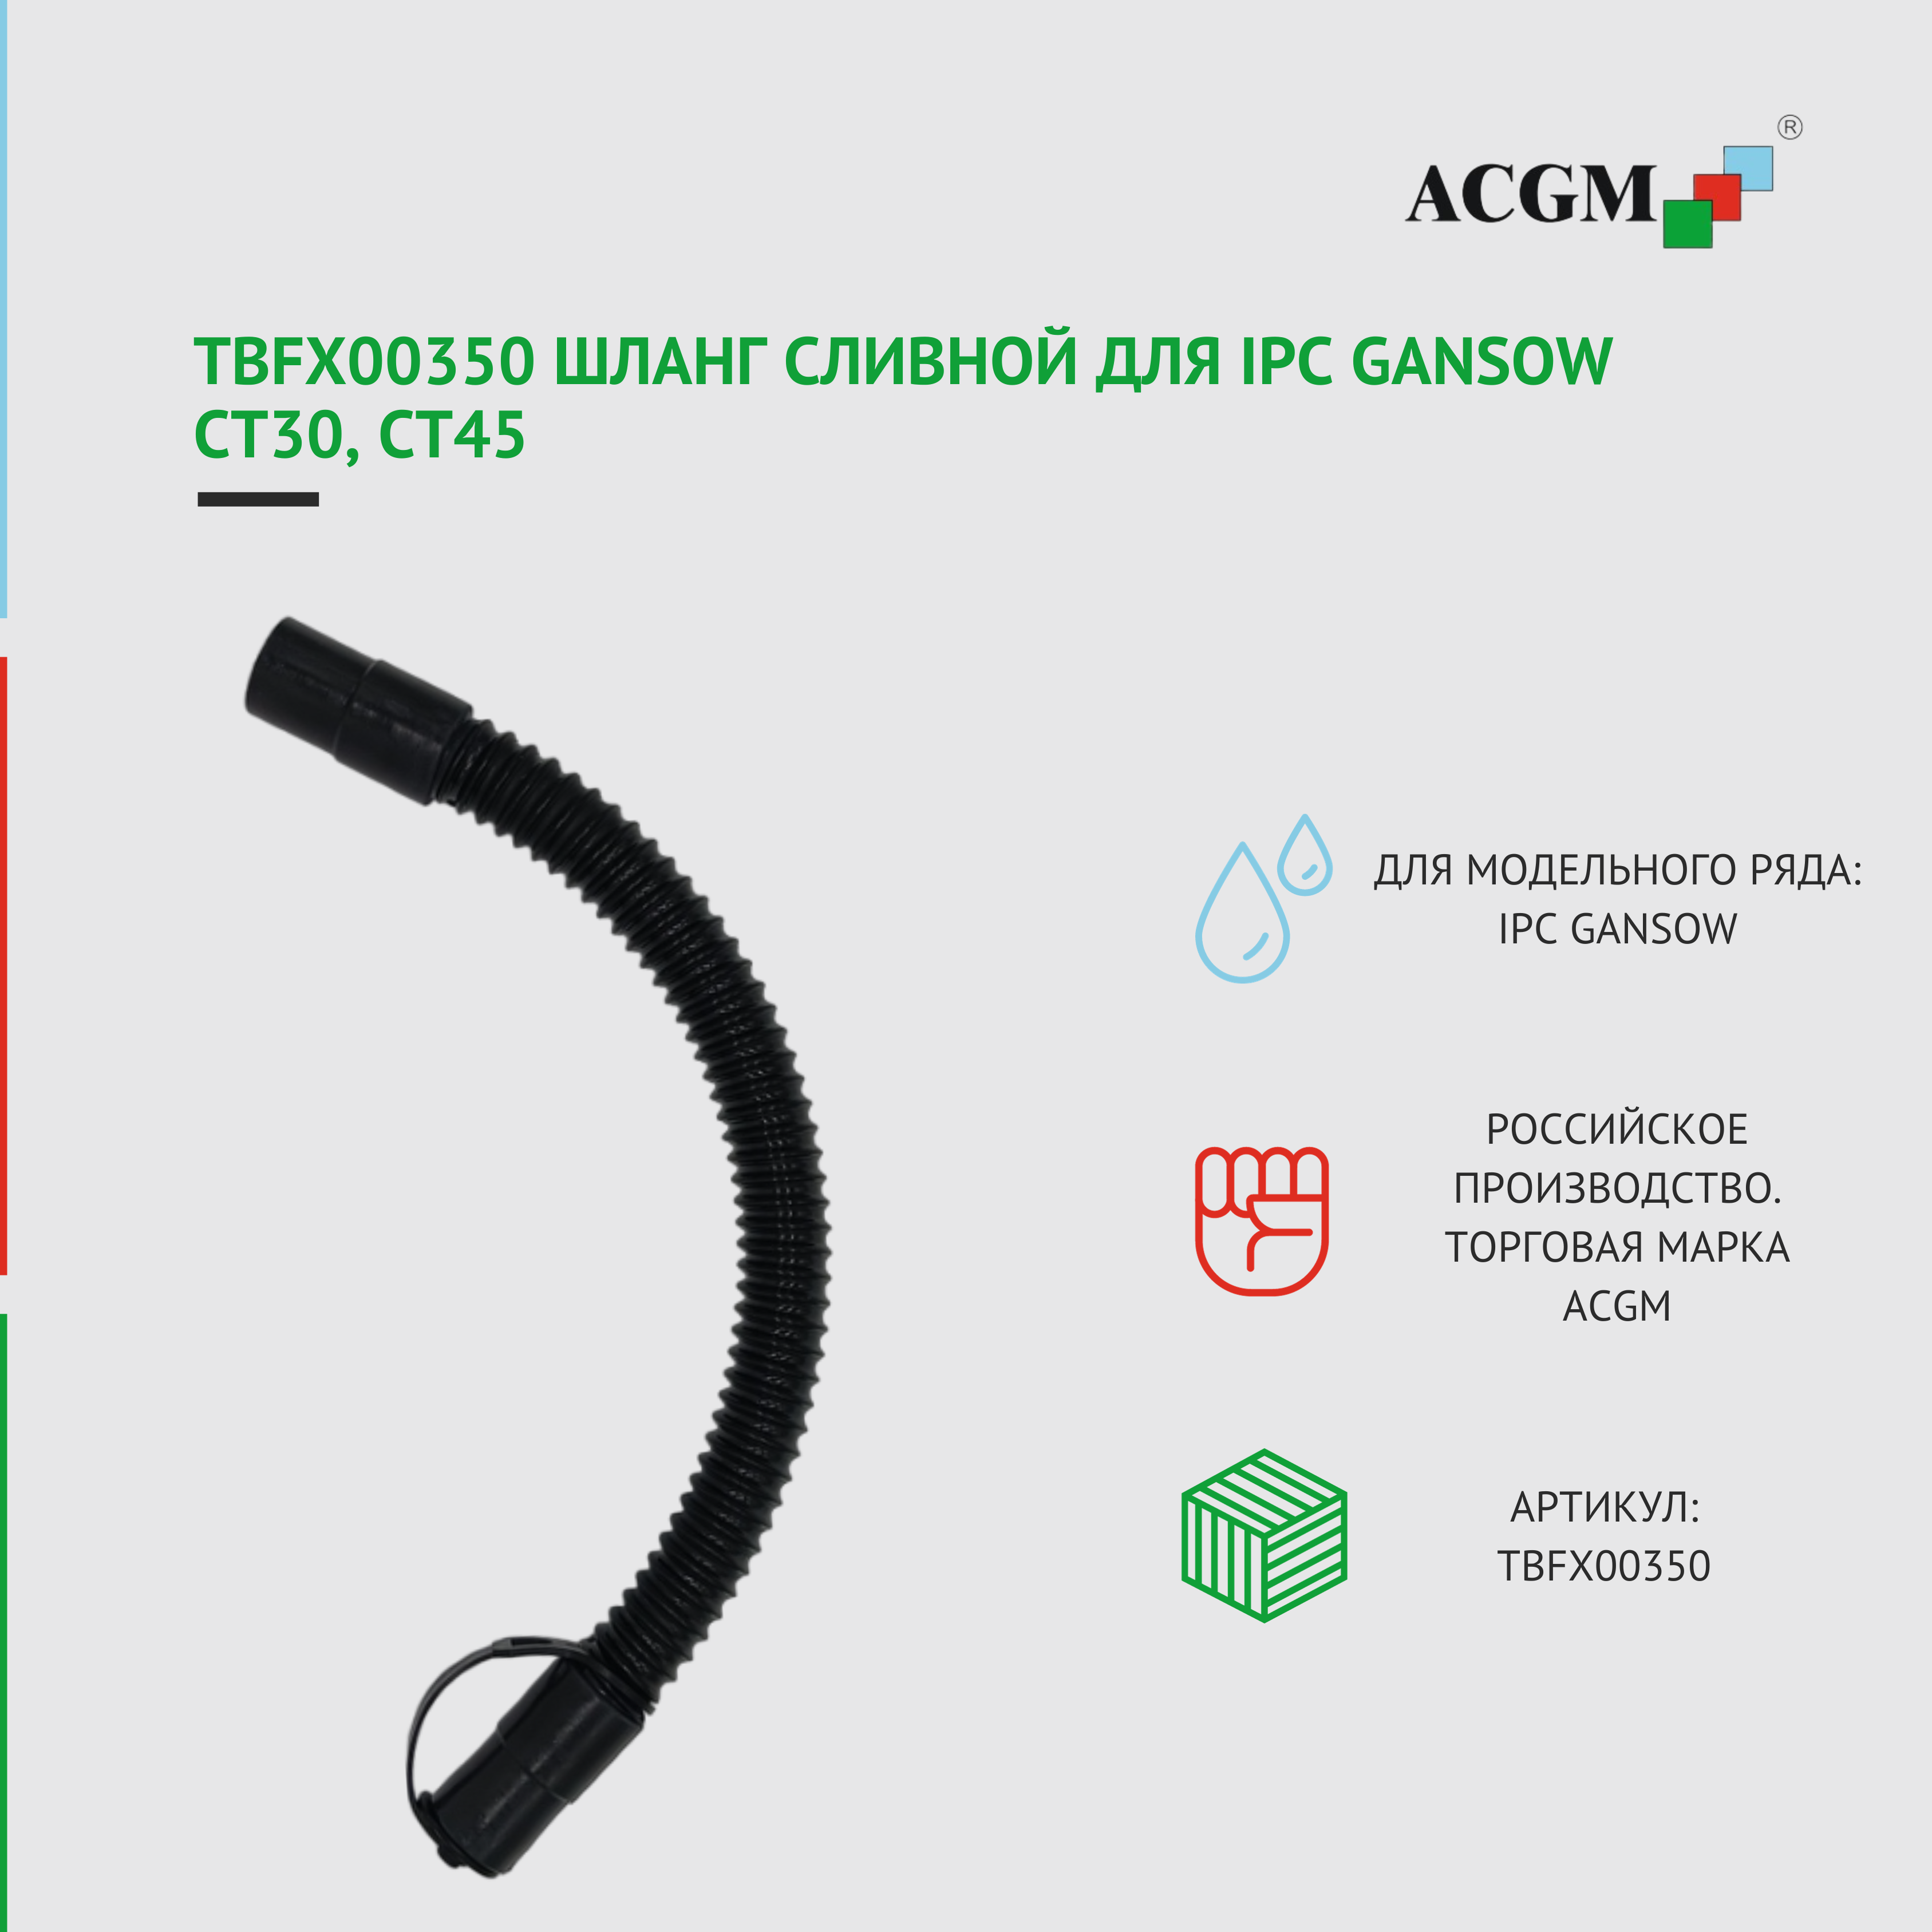 TBFX00350 Шланг сливной для IPC Gansow CT30, CT45